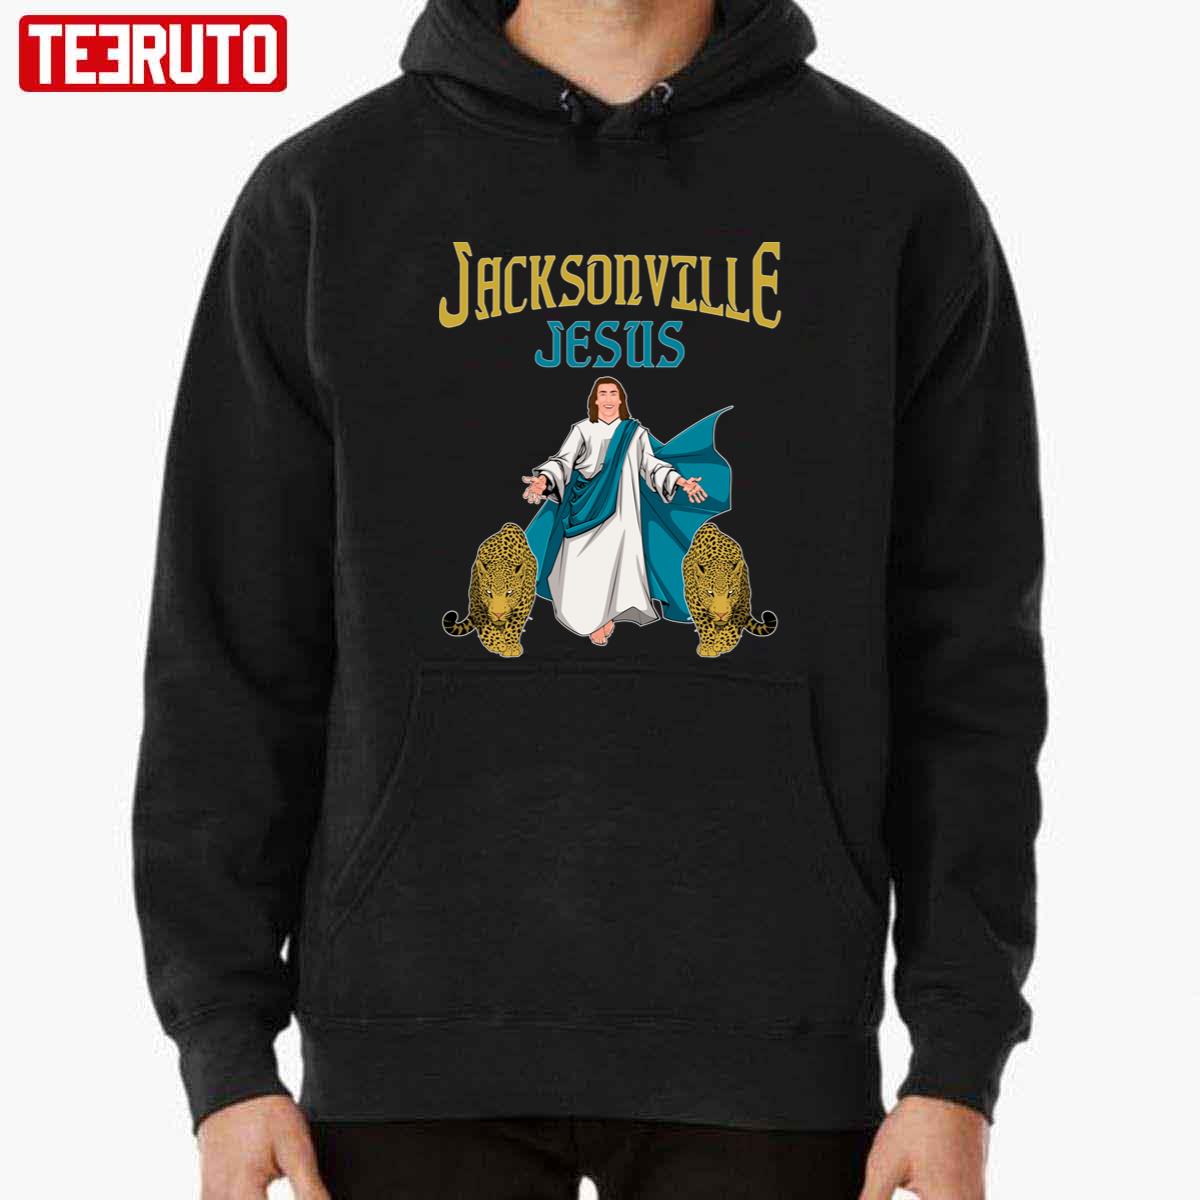 Jacksonville Jesus Franchise Savior ( Trevor Lawrence ) Shirt Designed &  Sold By Cristina Ottoni